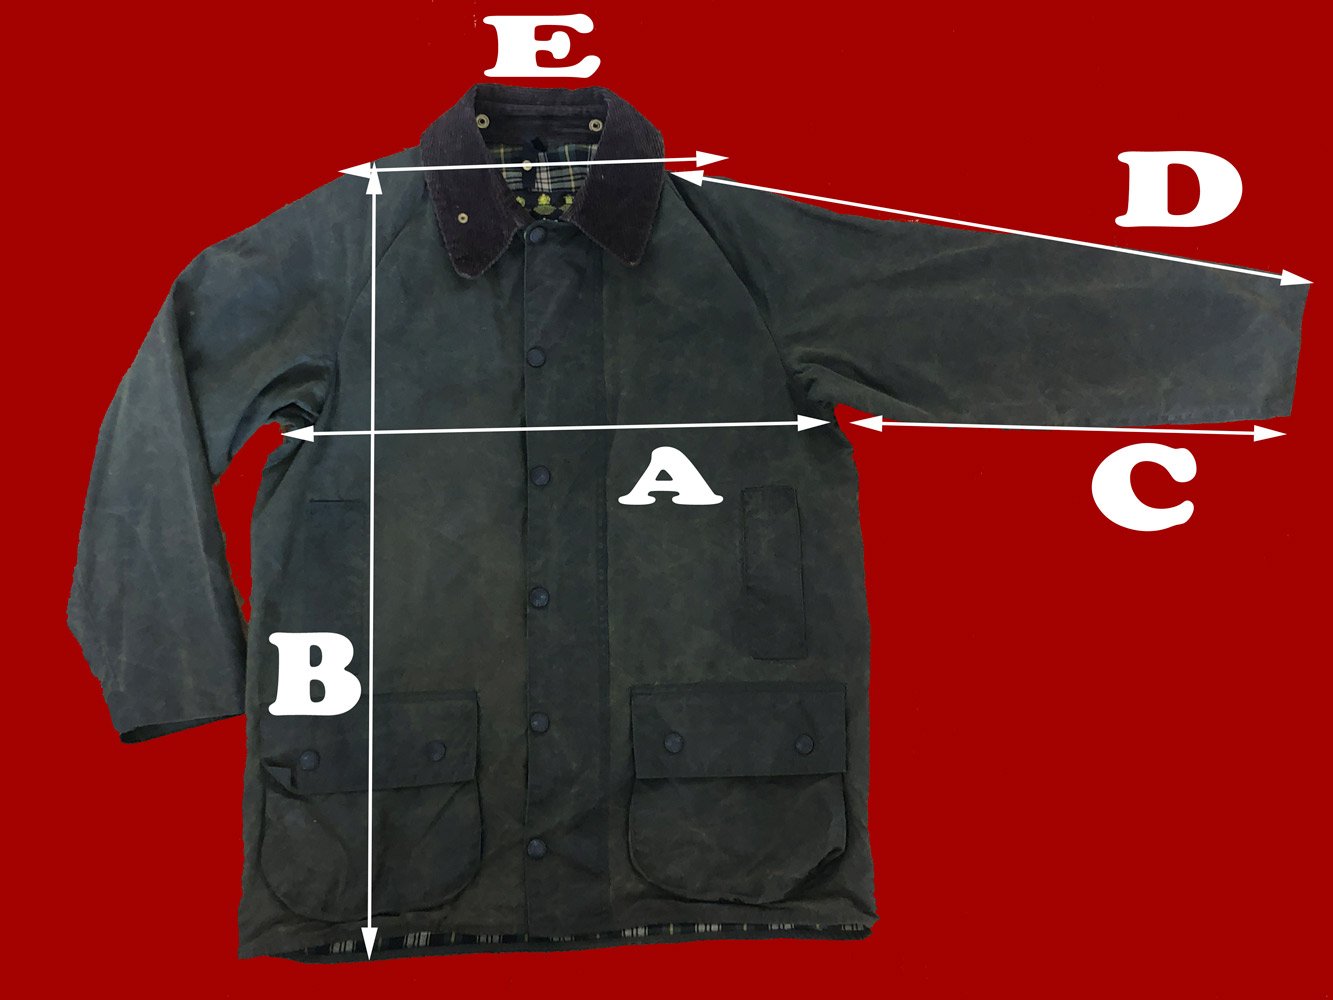 Giacca Barbour International Duke nero M - Man black Duke wax Jacket Size M